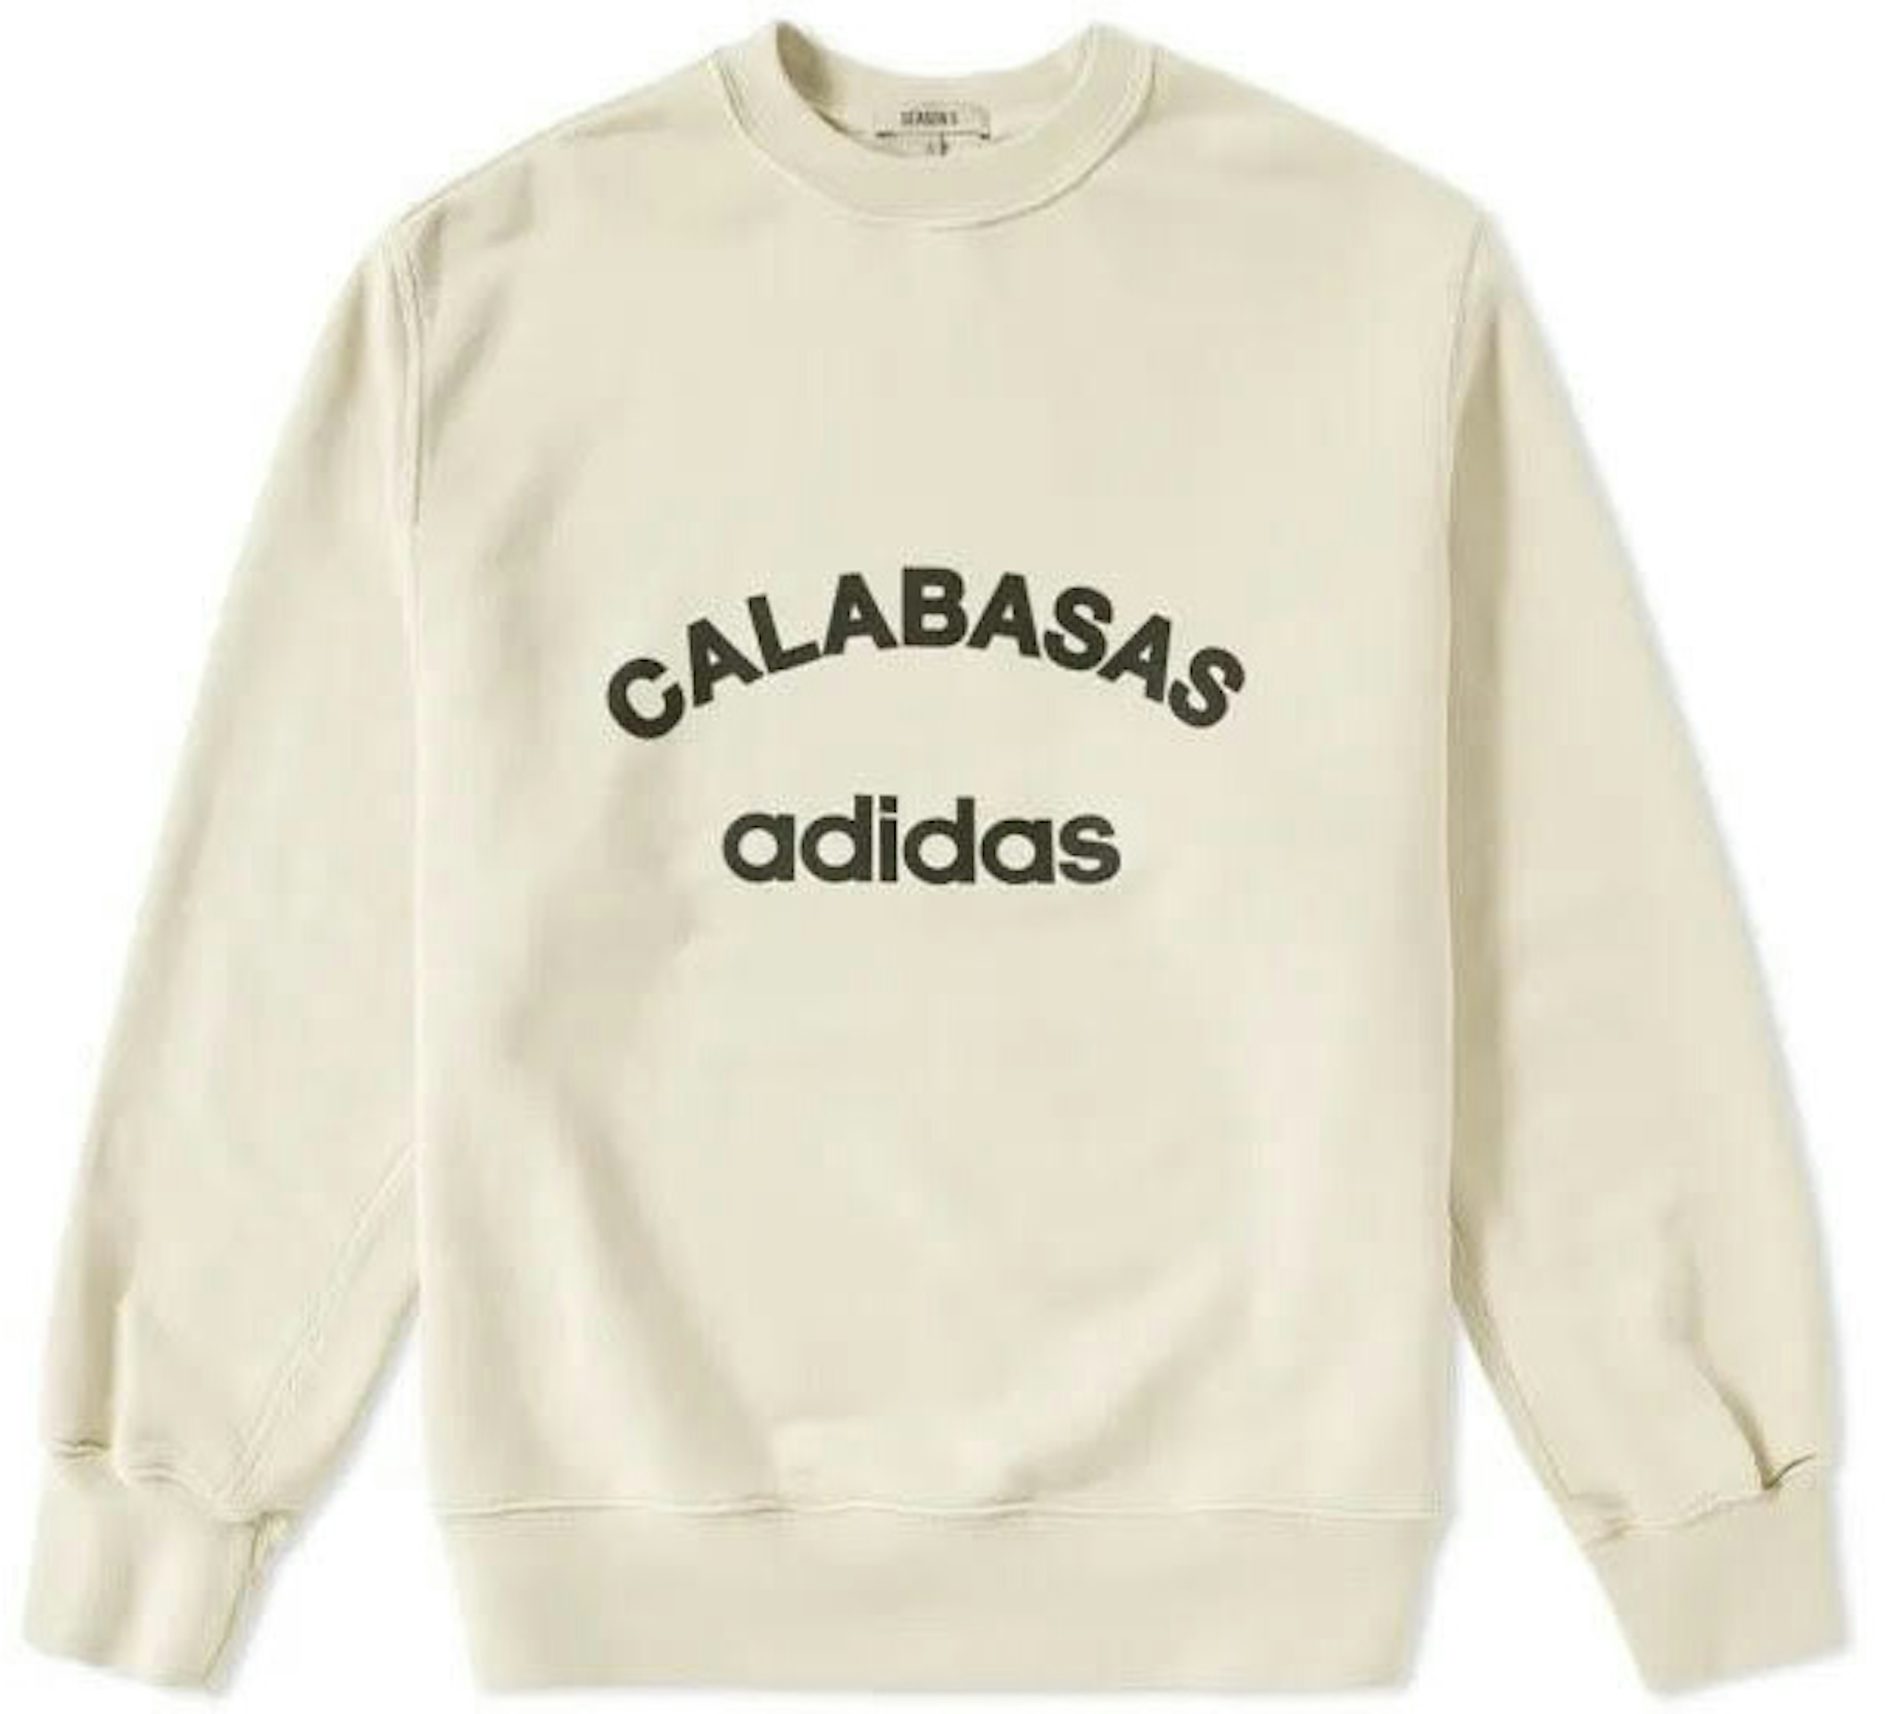 Yeezy Season 5 Adidas Calabasas Crewneck Sweatshirt Jupiter - US